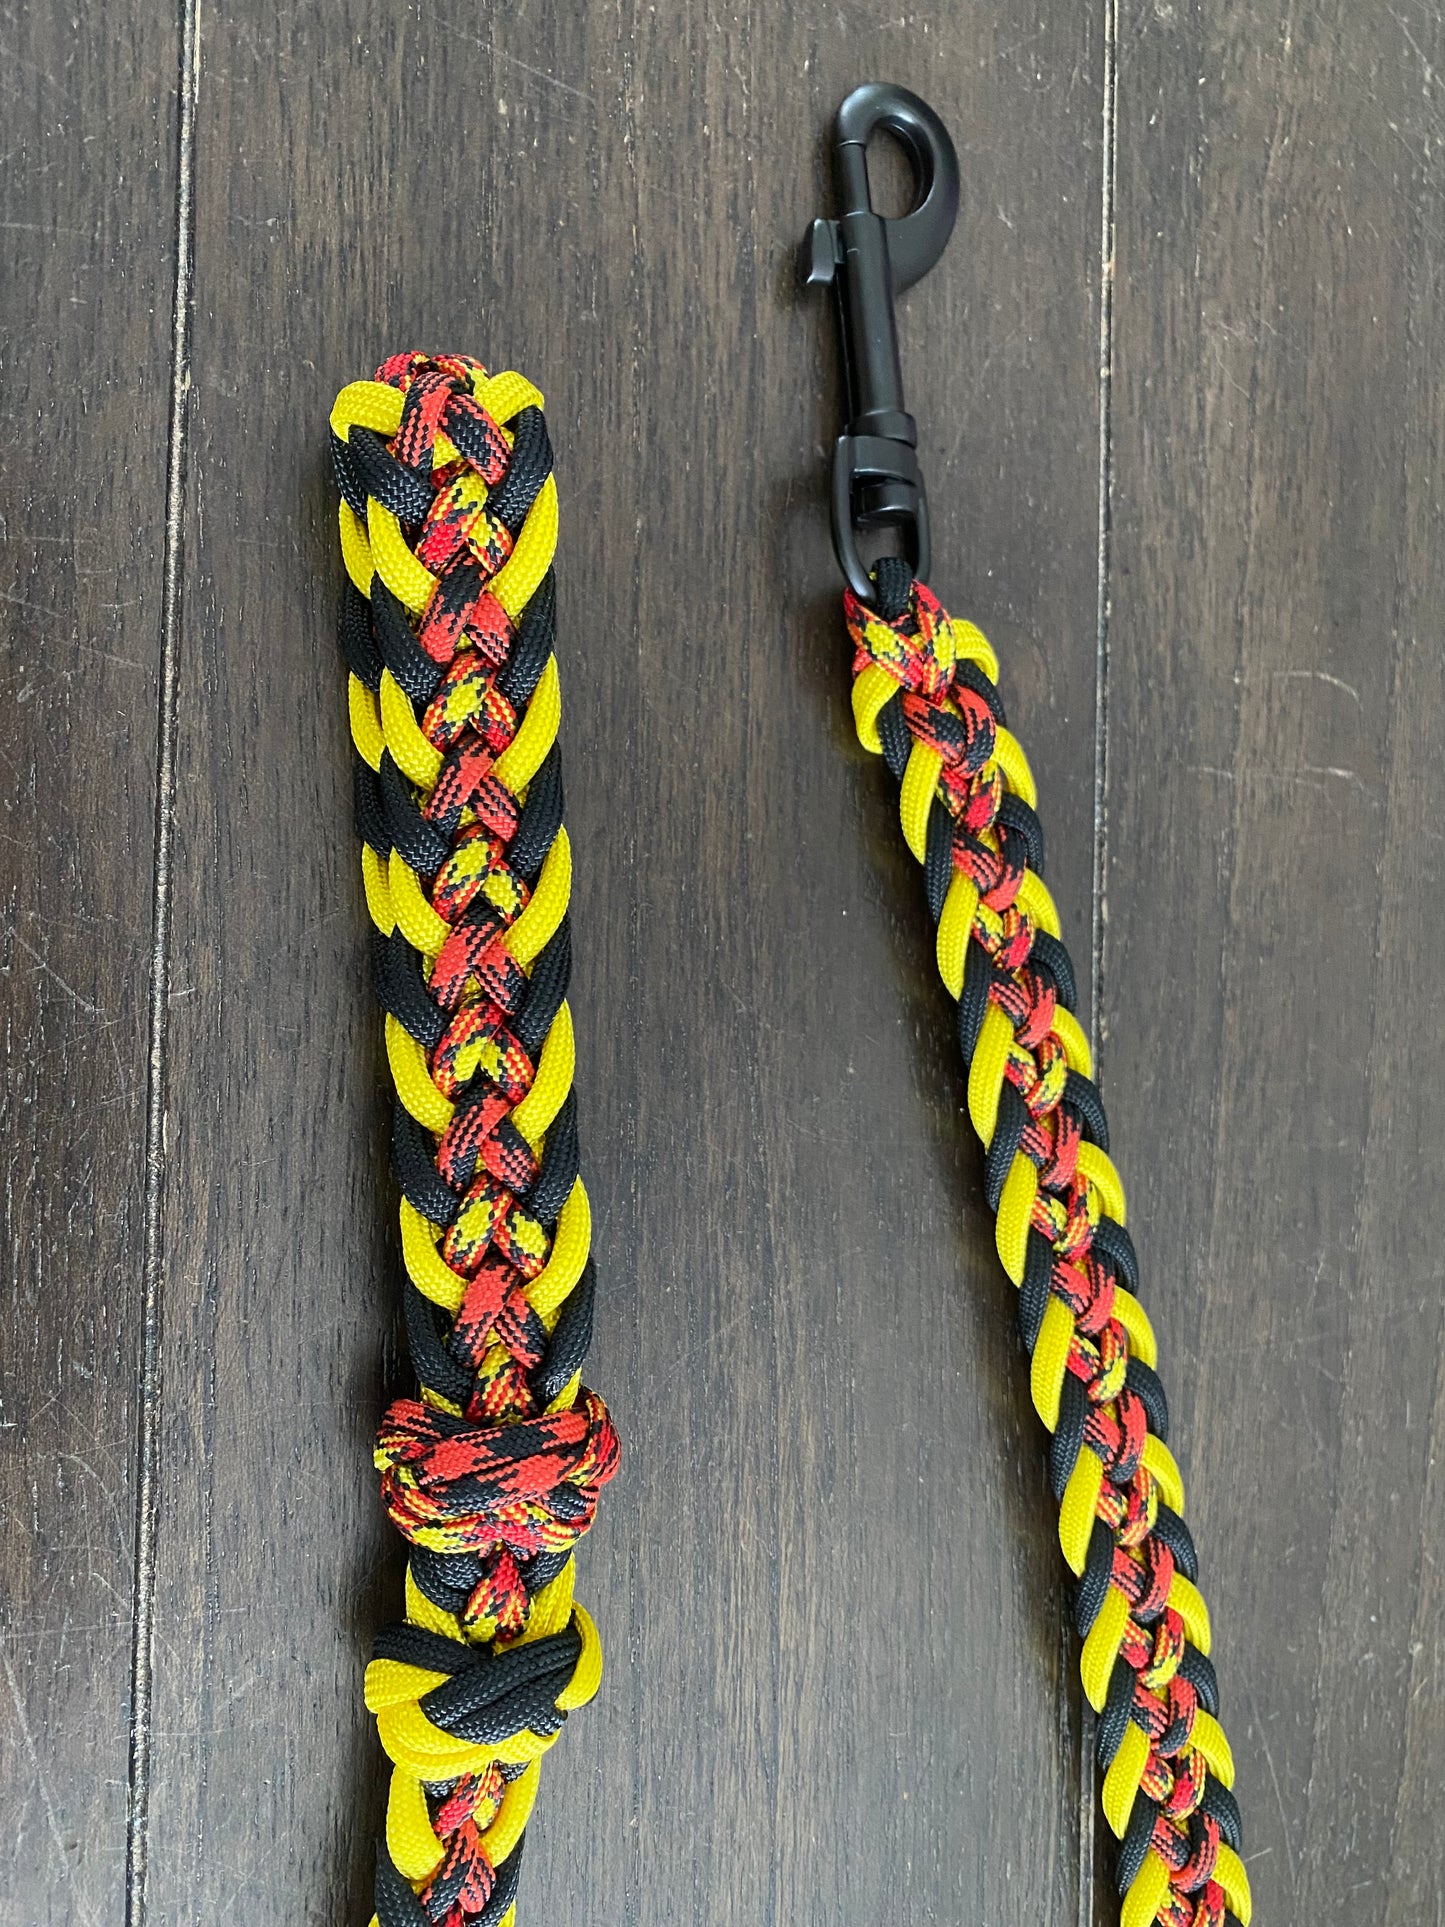 Premade Paracord Kara Yatsu Leash, Yellow, Black, and Red, 31.5 inches long